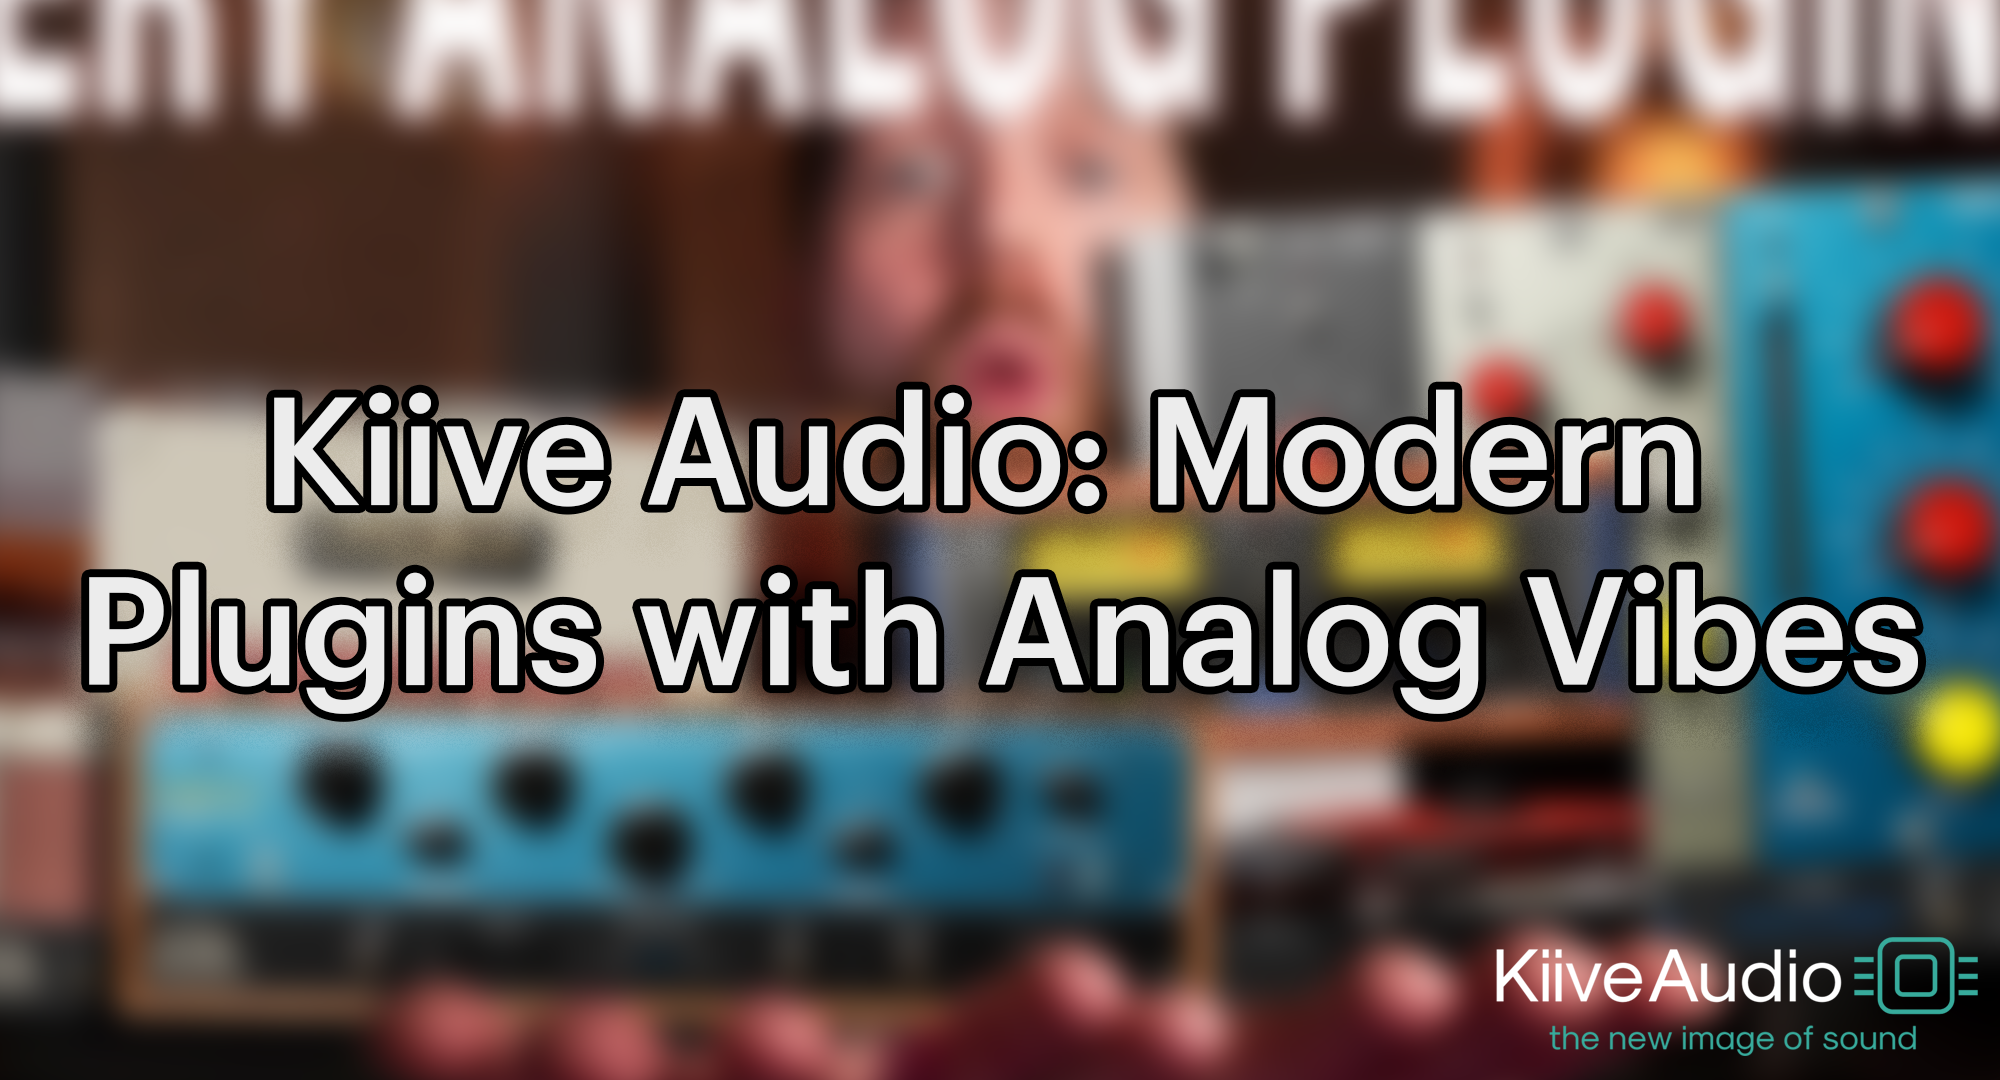 Kiive Audio: Modern Plugins with Analog Vibes